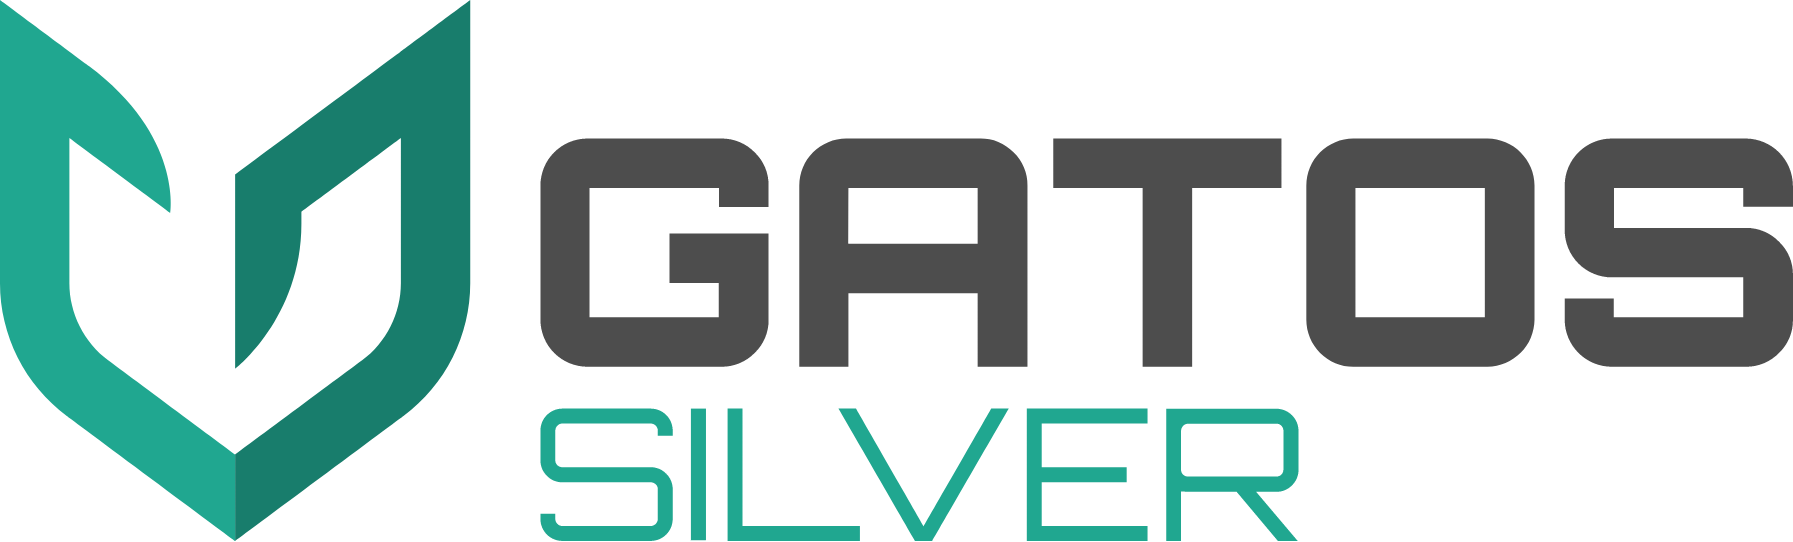 Gatos Silver logo large (transparent PNG)